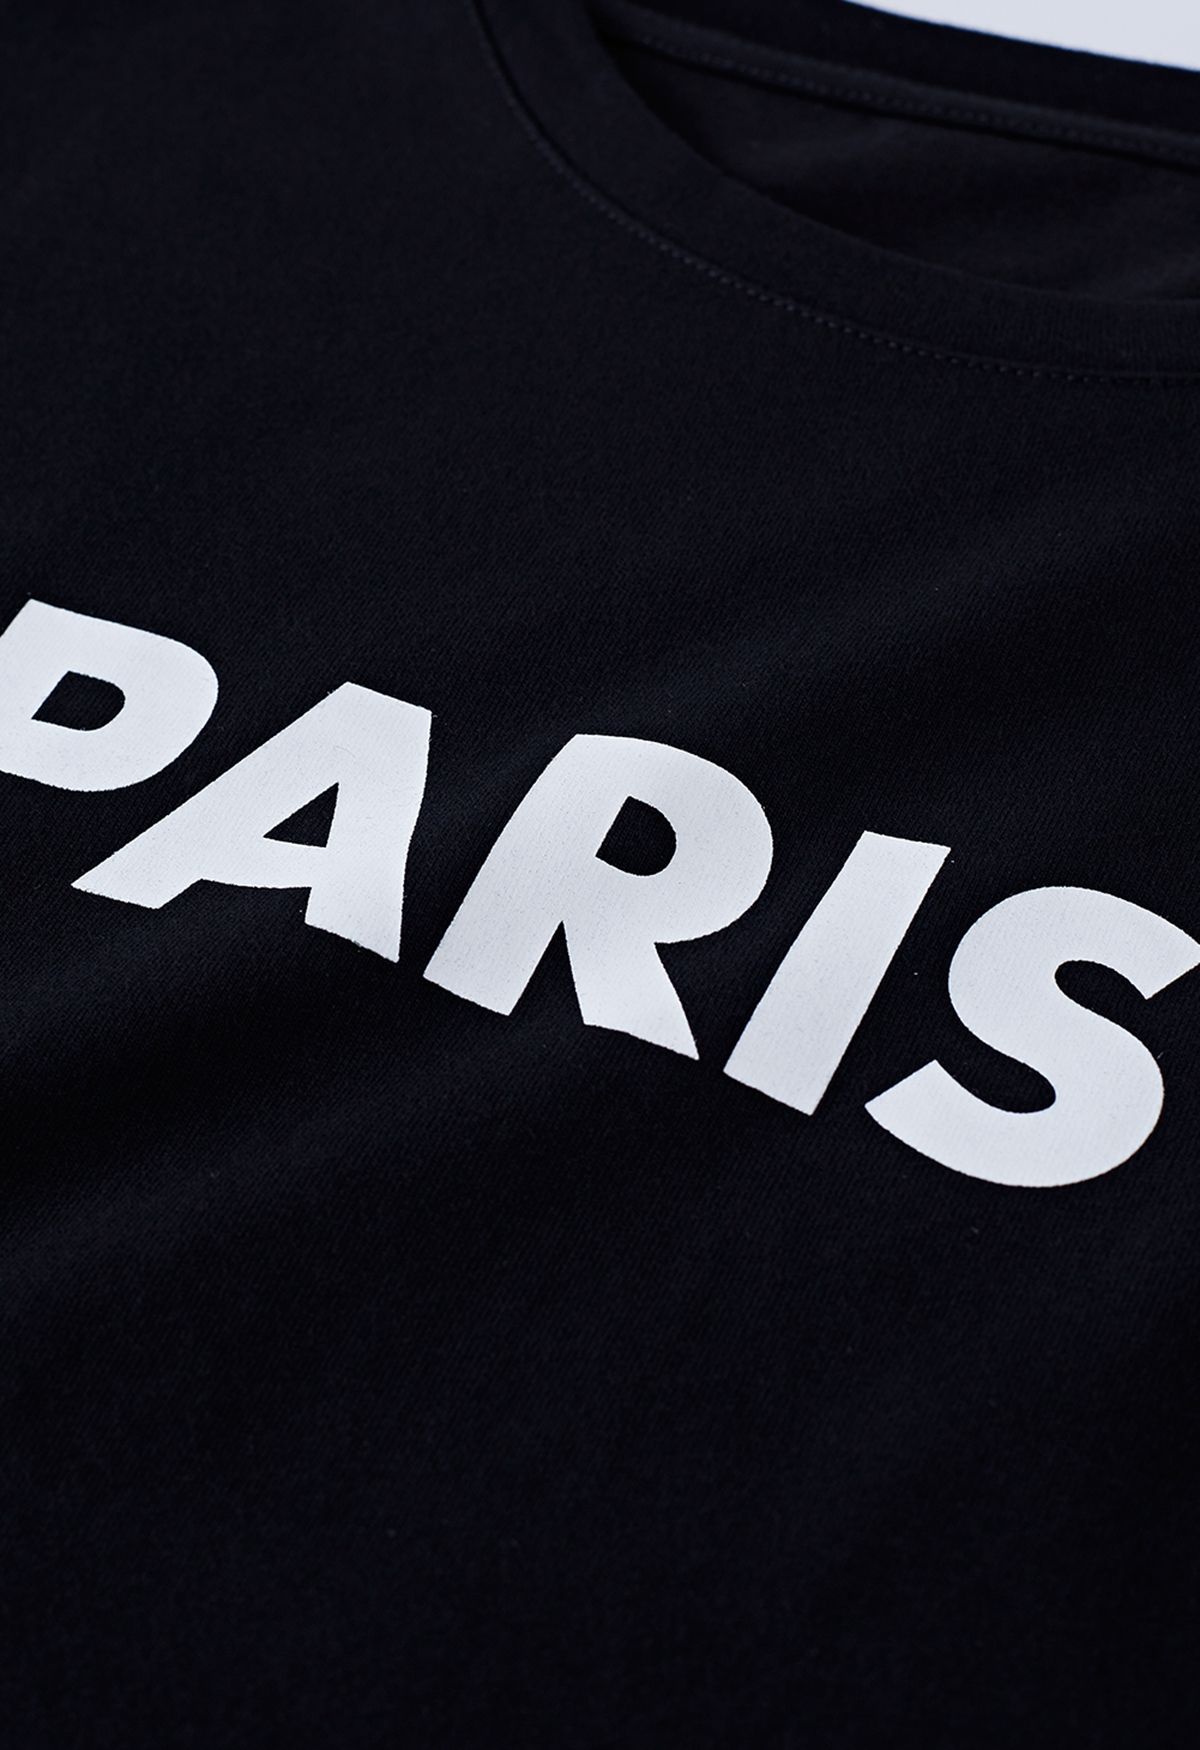 Paris Print Round Neck T-Shirt in Black